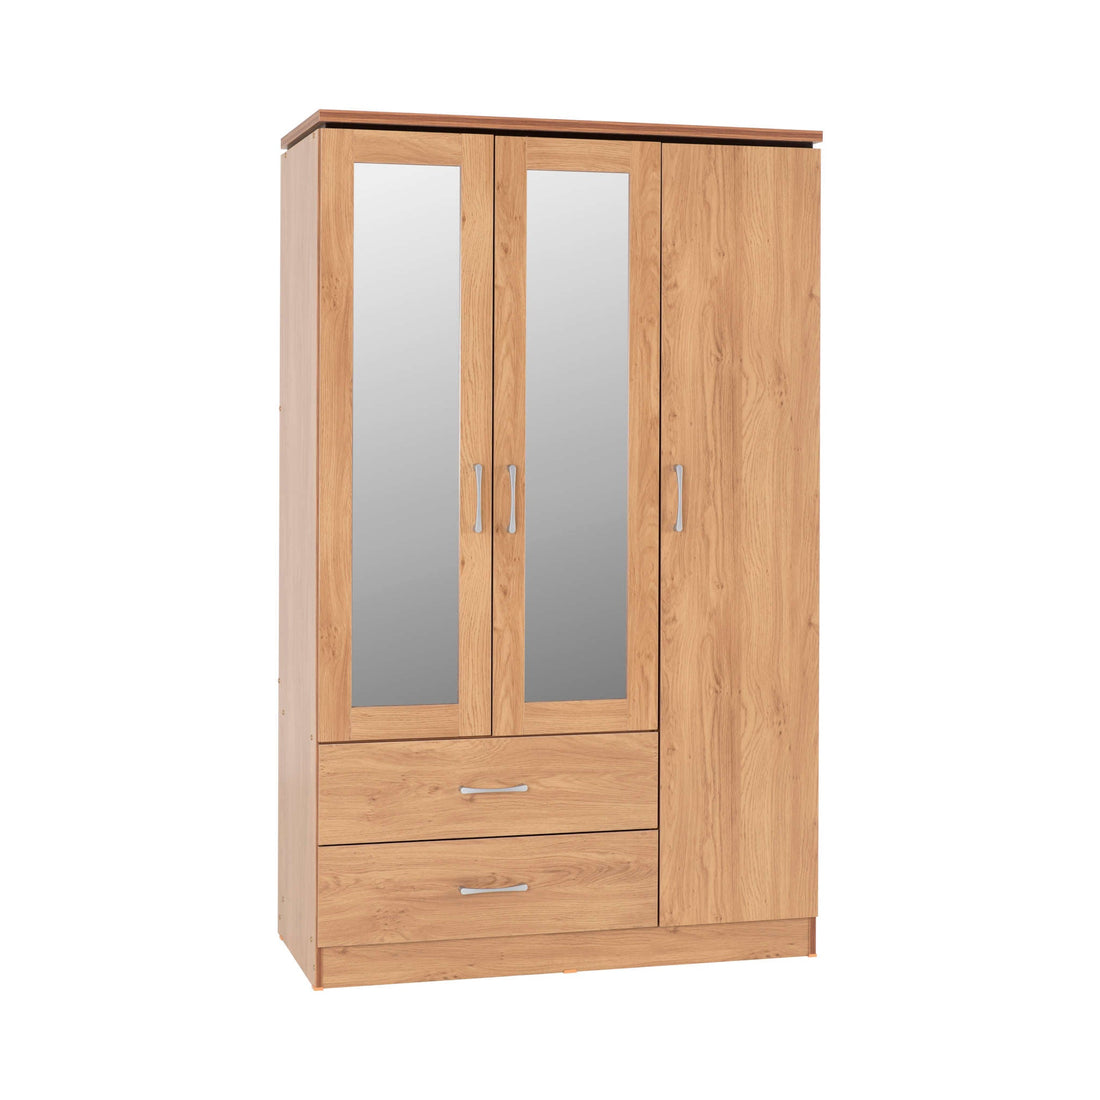 Charles 3 Door 2 Drawer Mirrored Wardrobe (Oak Effect Veneer with Walnut Trim)